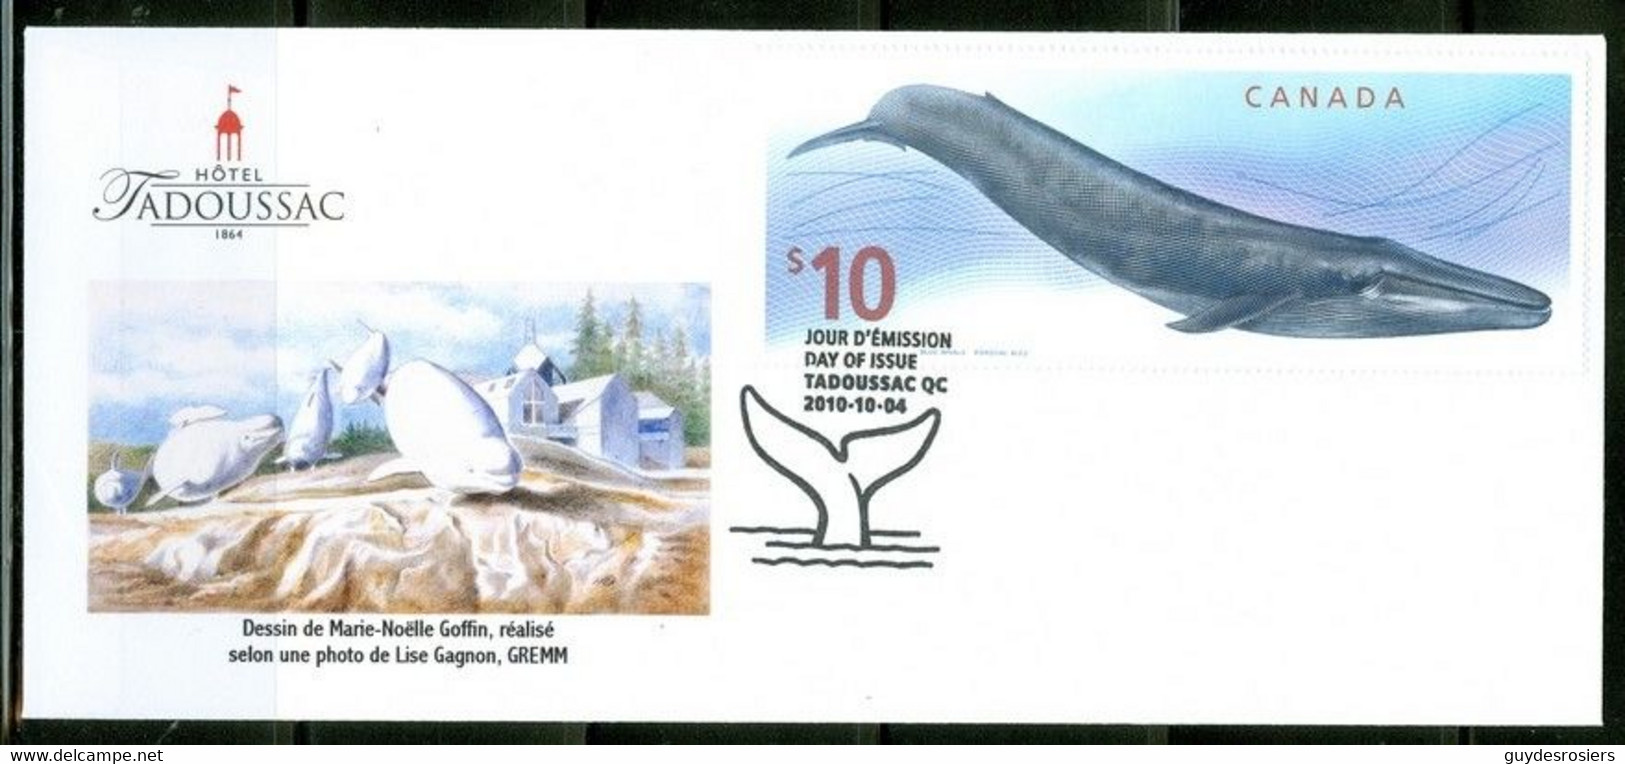 Baleine / Whale; Marie-N. Goffin; Hôtel Tadoussac; Timbre Scott # 2405 Stamp; PPJ / FDC (0338) - Lettres & Documents